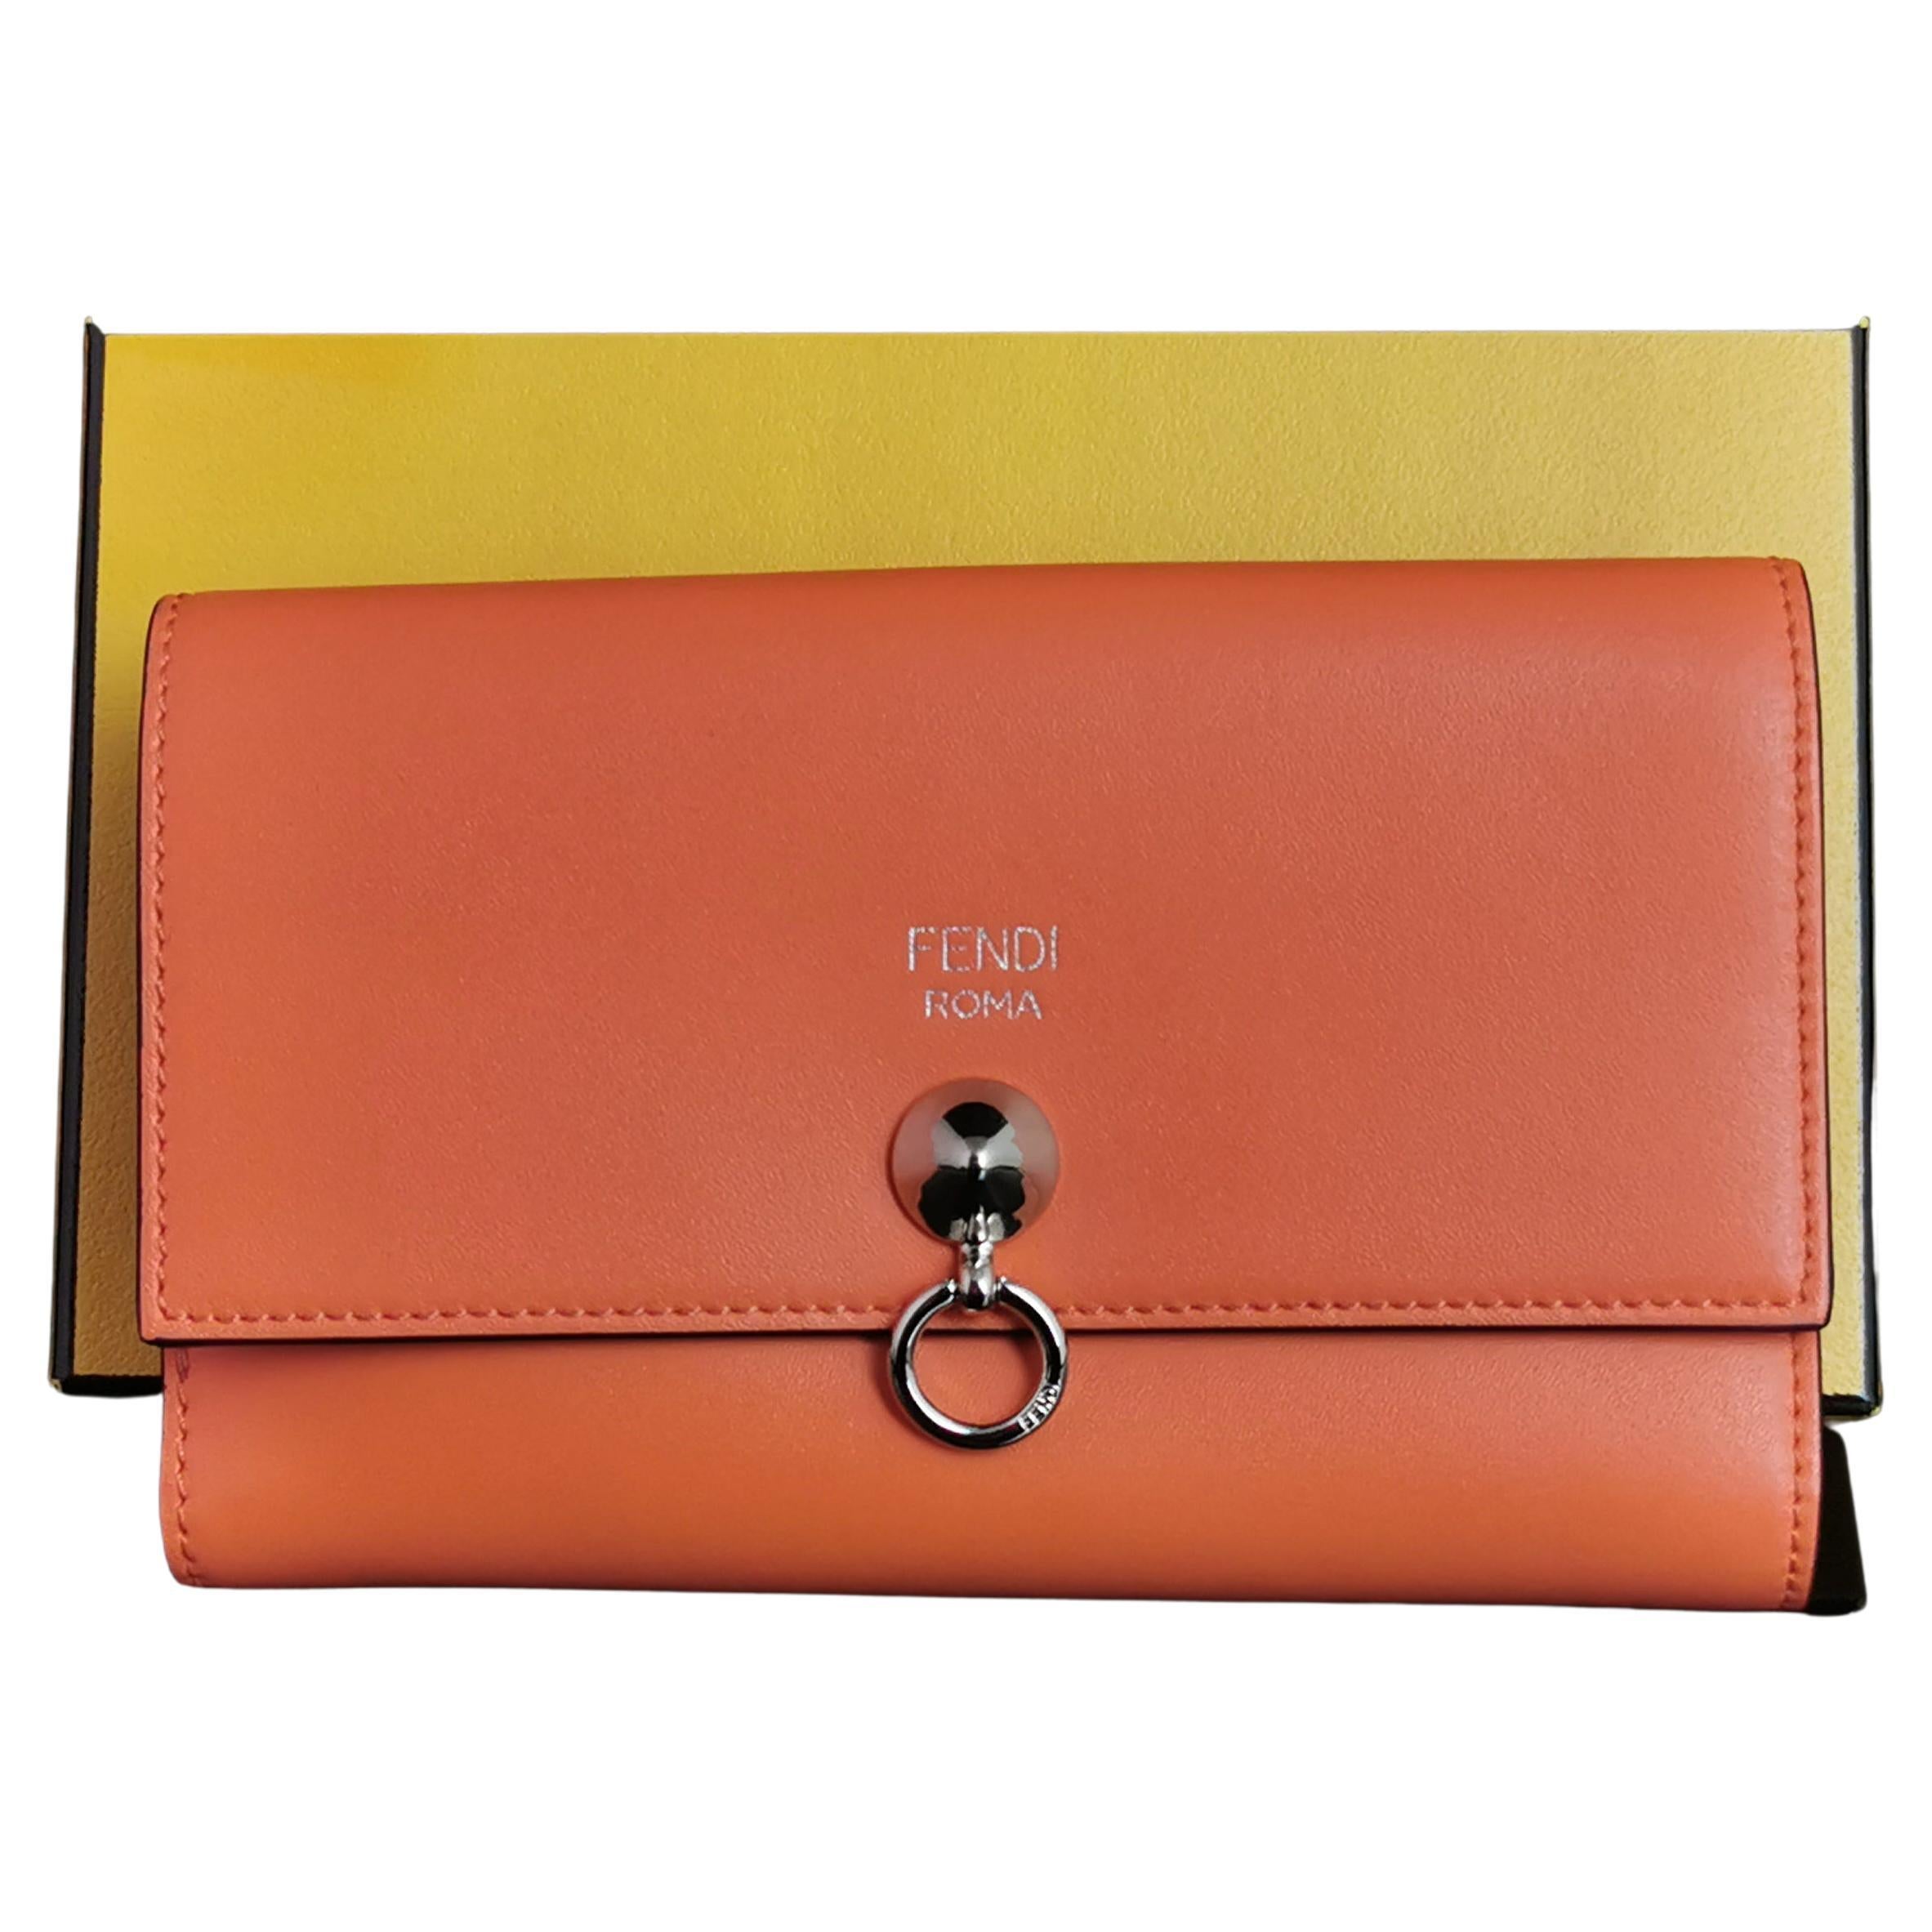 Fendi coral leather clutch purse, bi fold wallet, boxed 